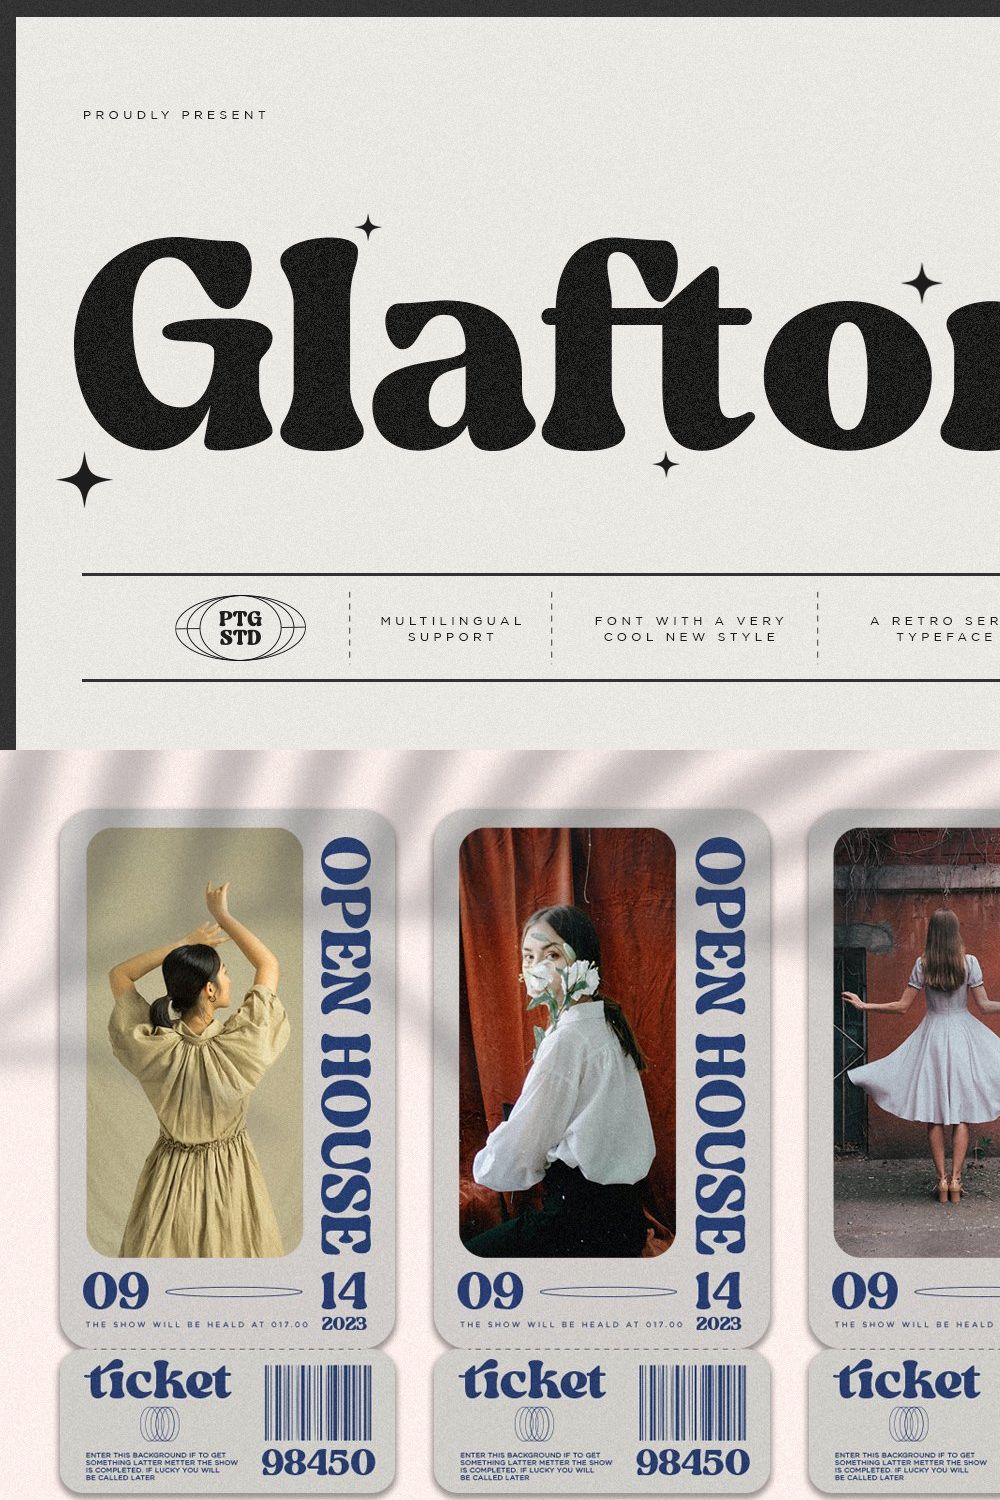 Glafton | Retro Serif pinterest preview image.